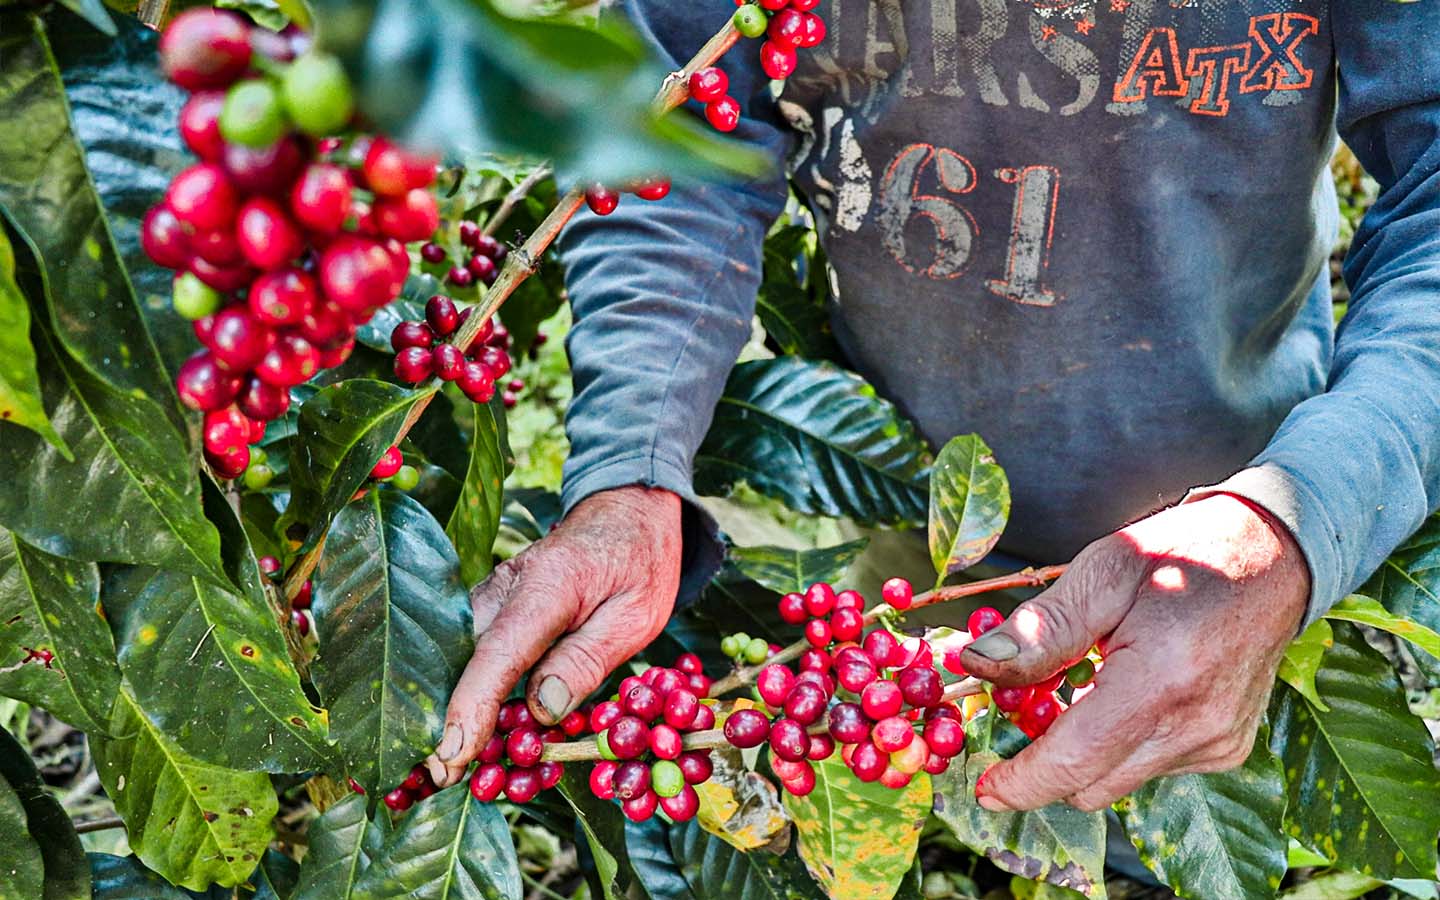 Coffee Cherry picking at Finca El Derrumbo